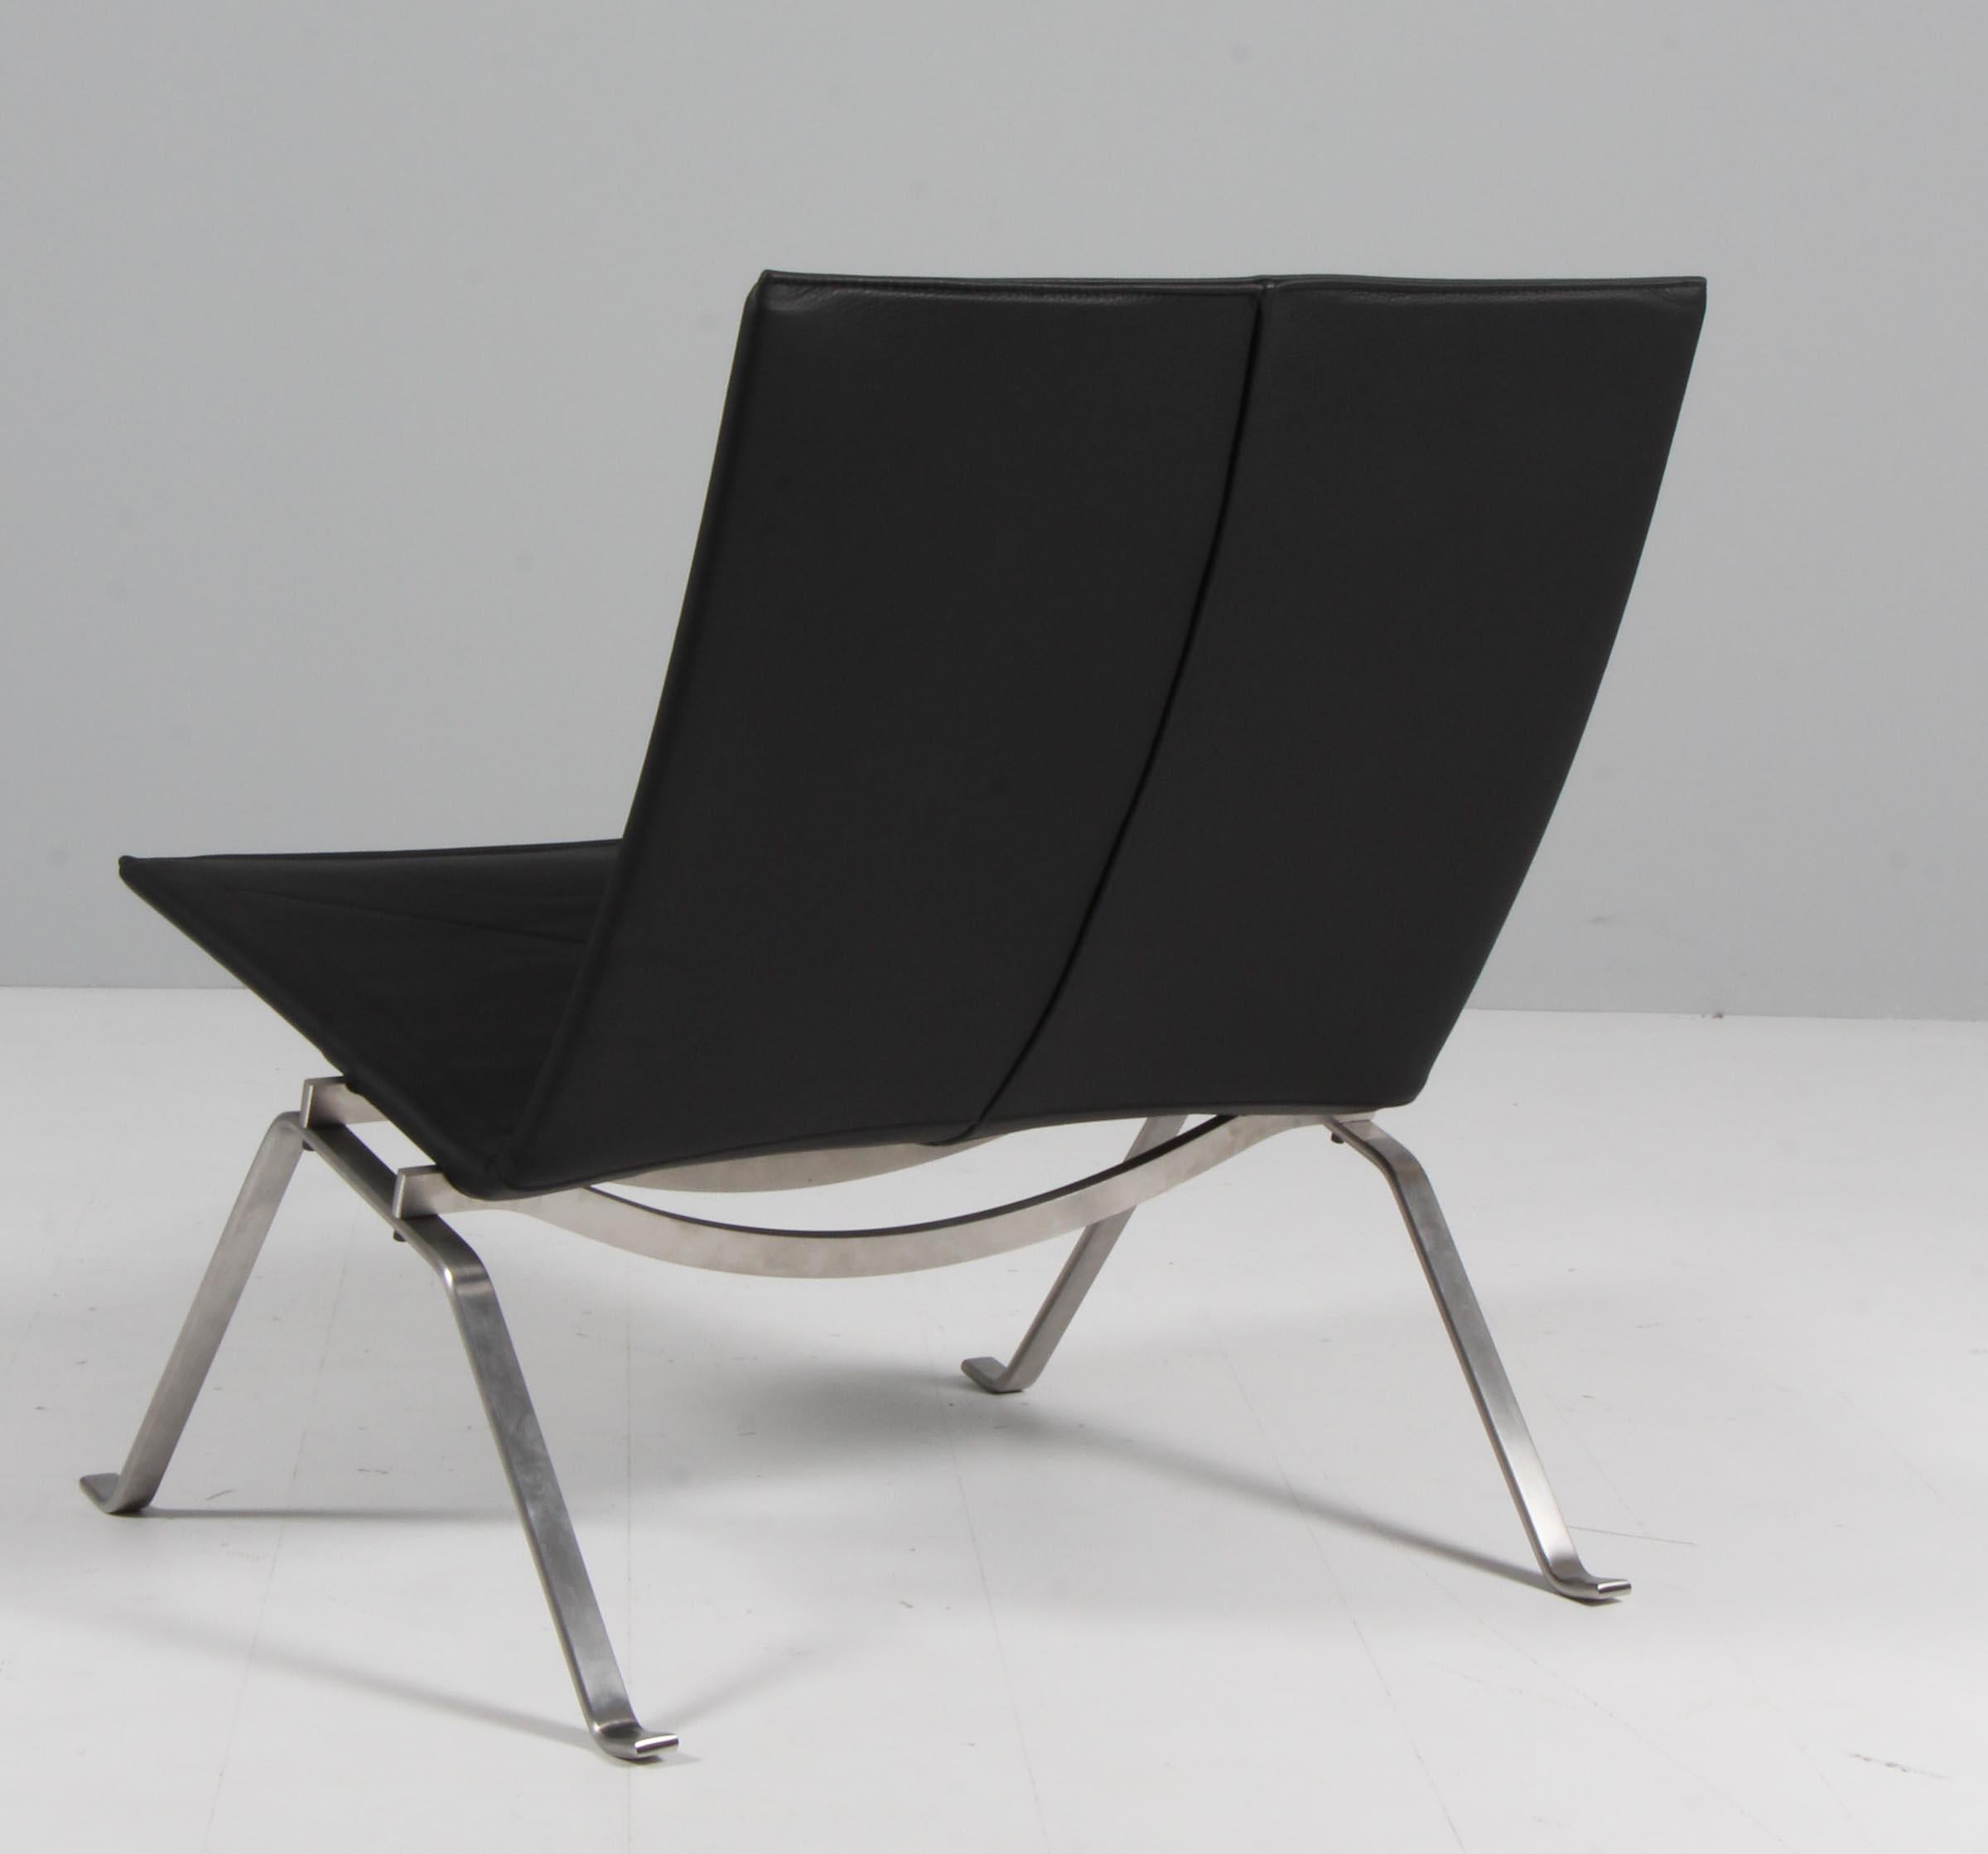 Stainless Steel Poul Kjærholm PK22 Lounge Chair, new upholstered